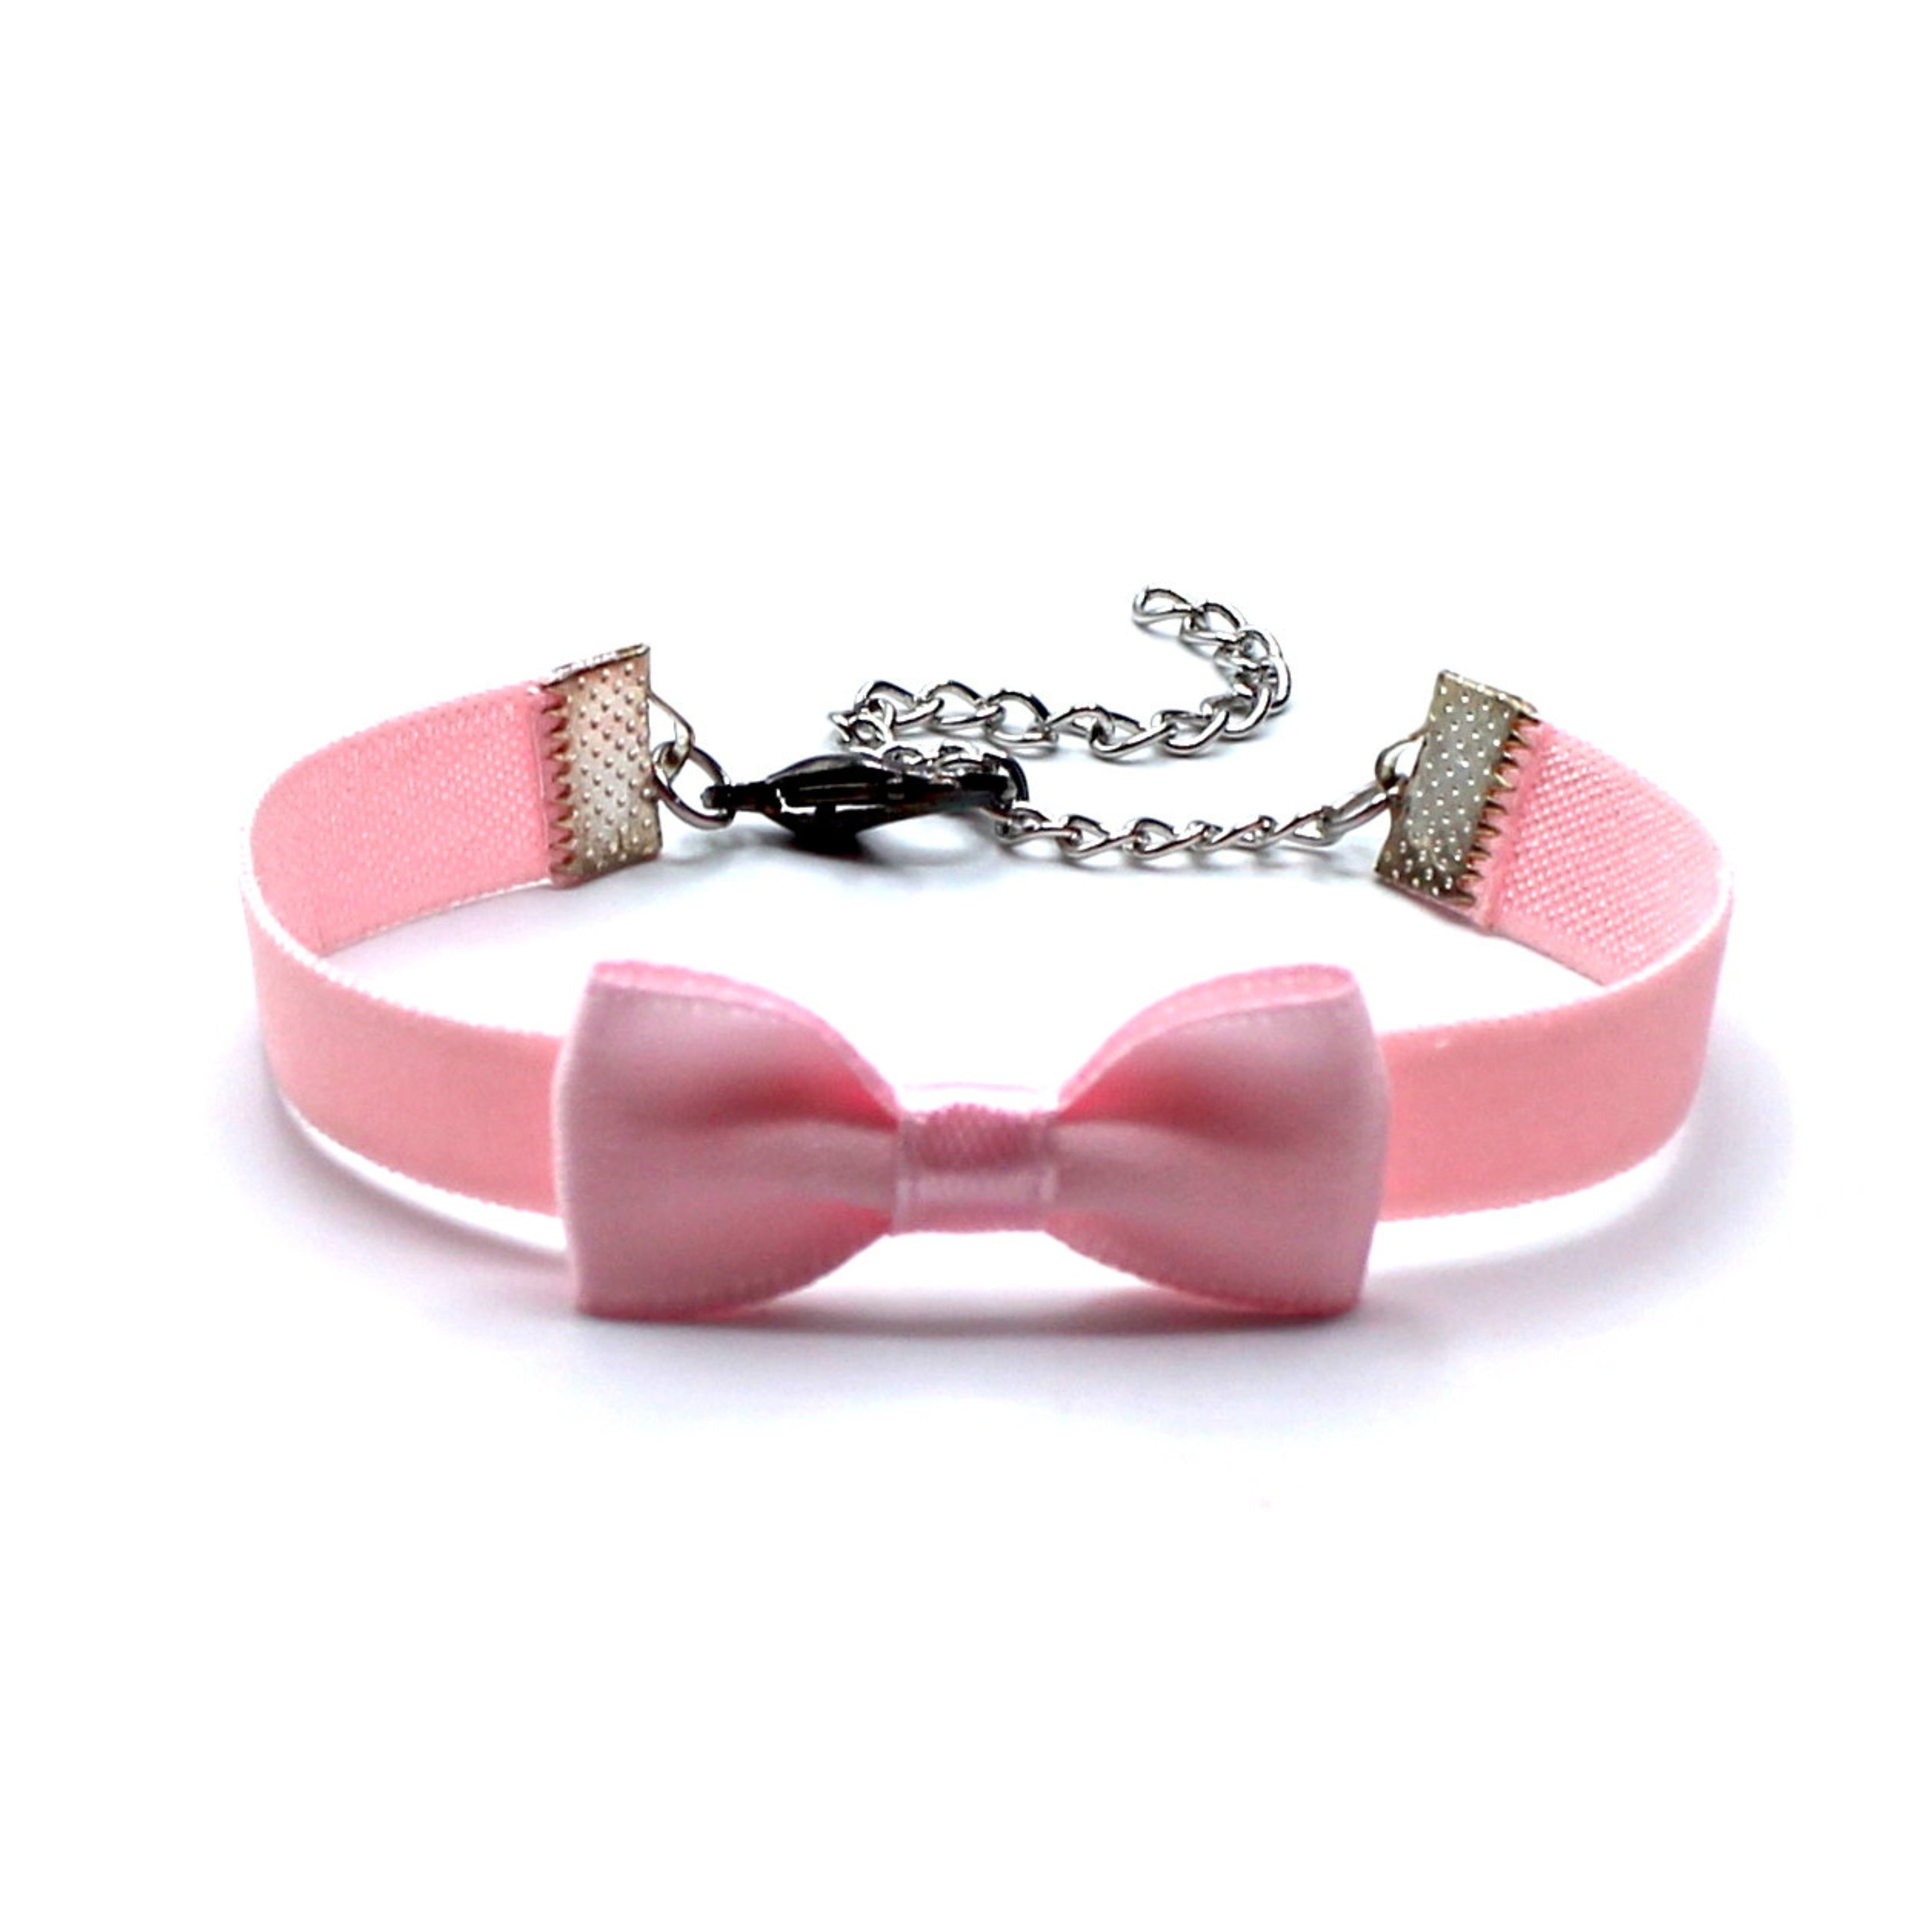 Hickey Pink Bow Bracelet 